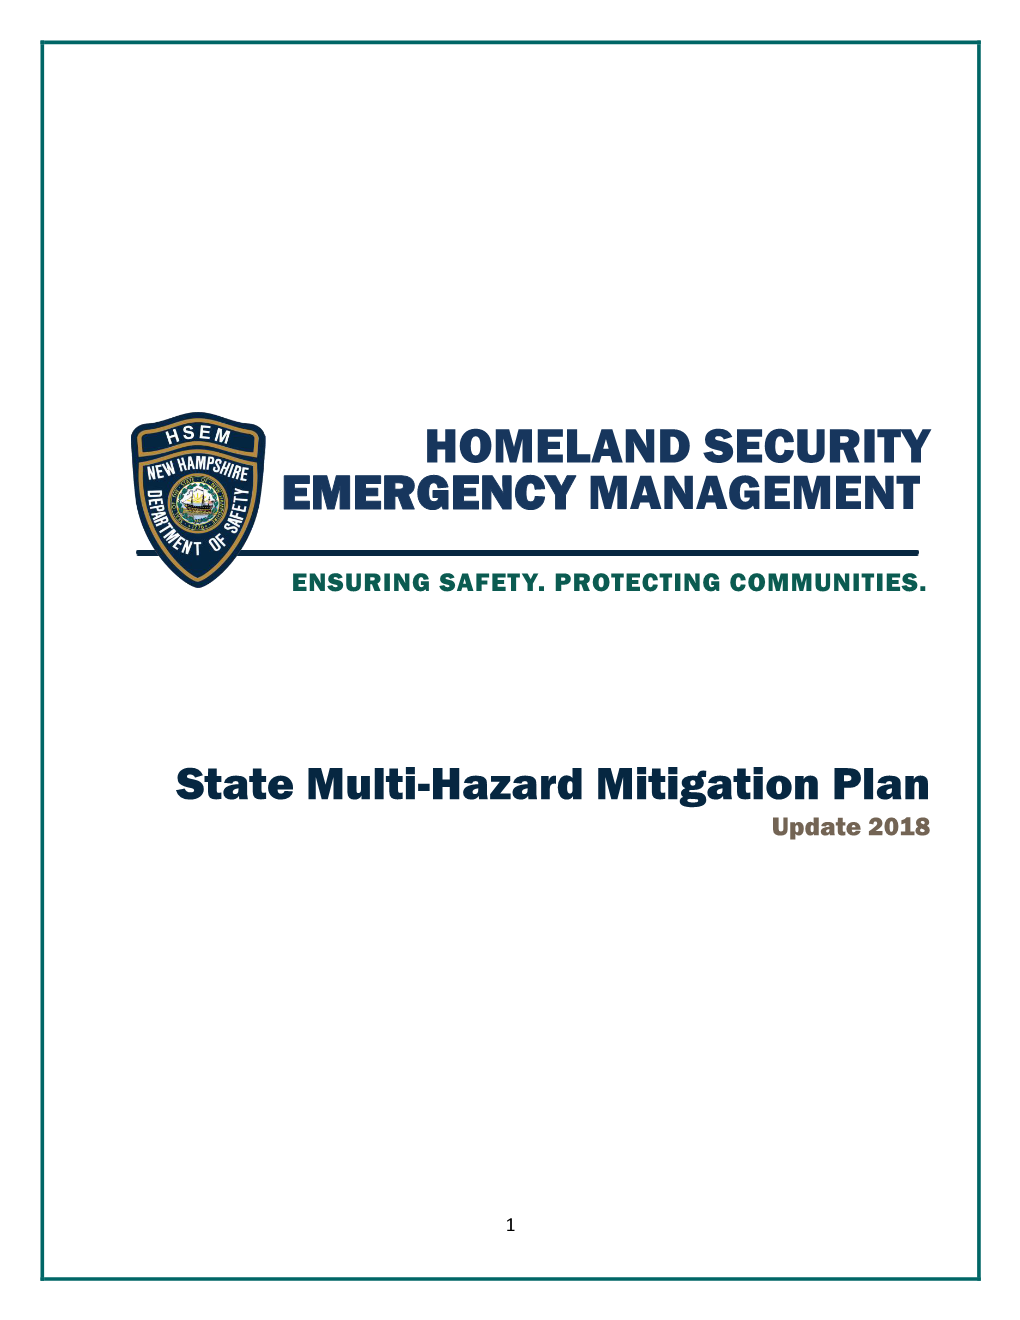 Homeland Security Emergency Management